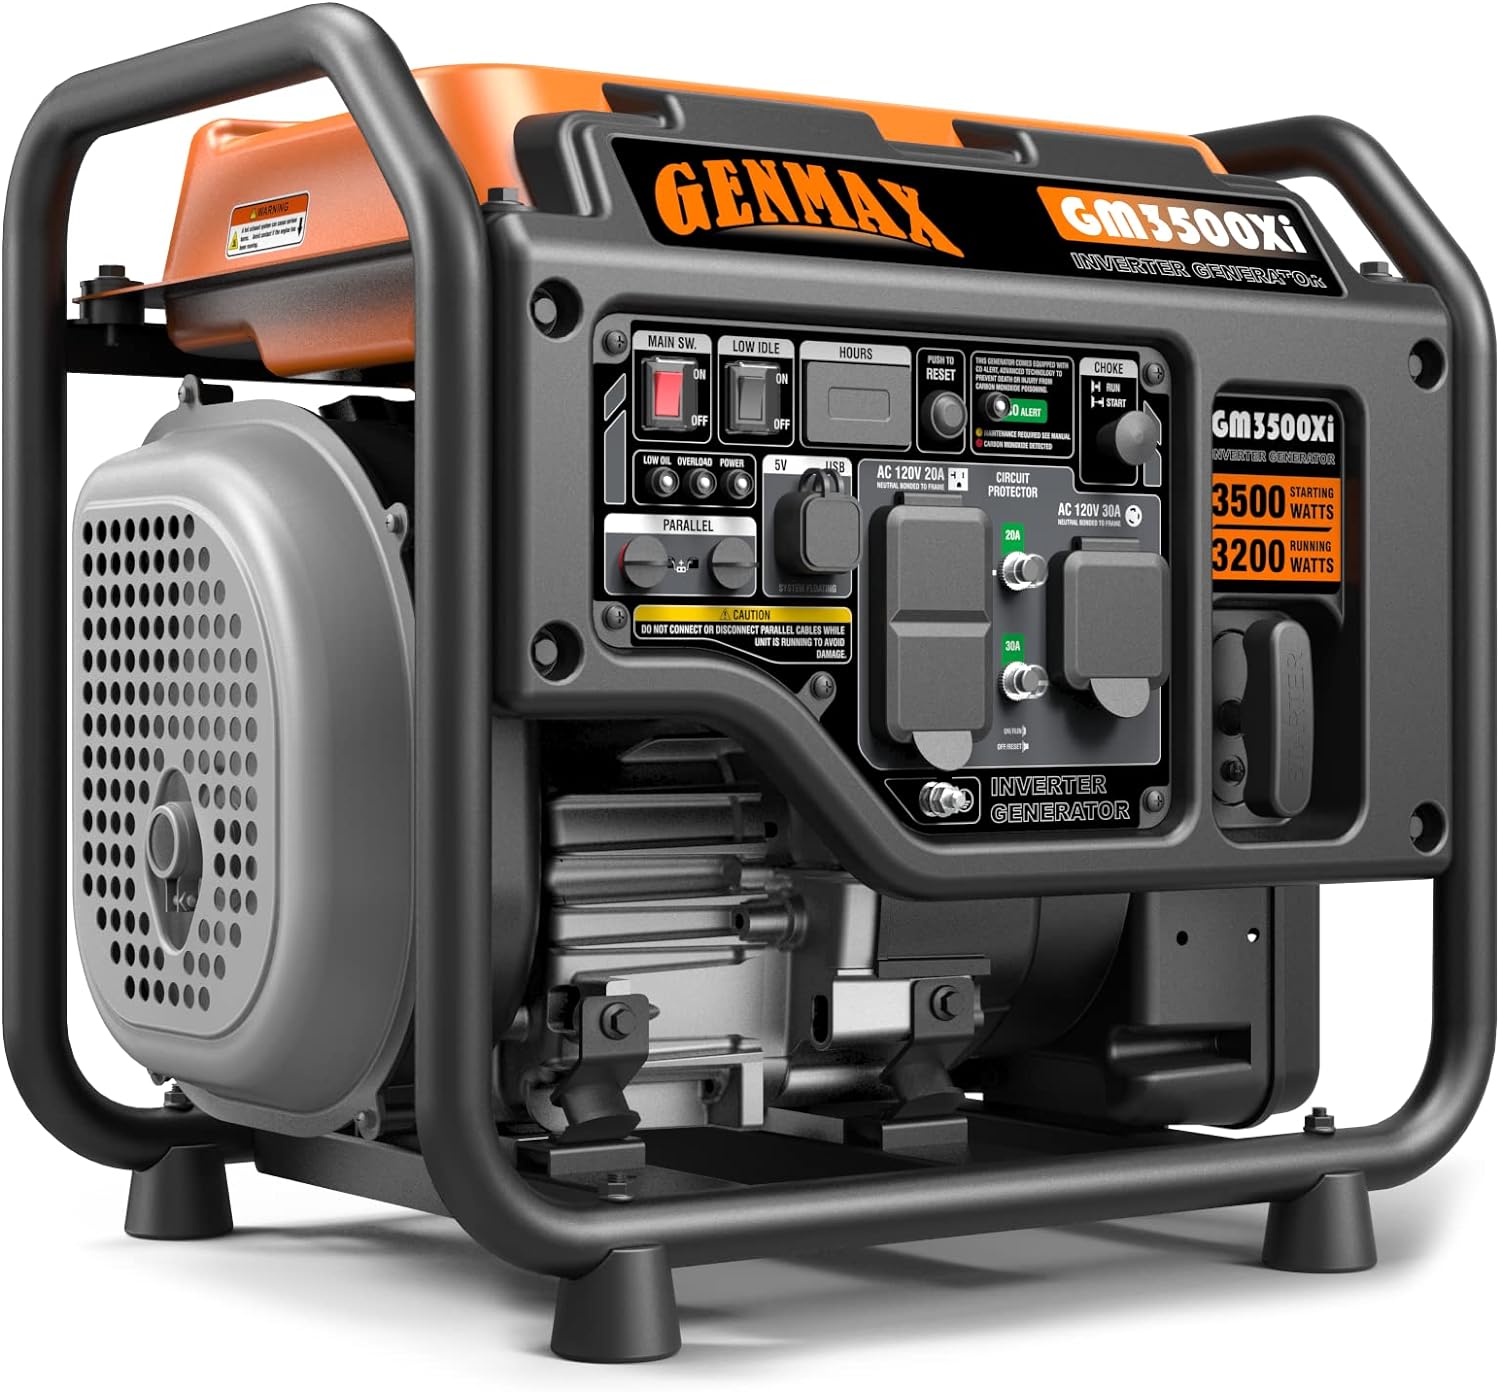 GENMAX GM3500Xi Open Frame RV Inverter Generator Review